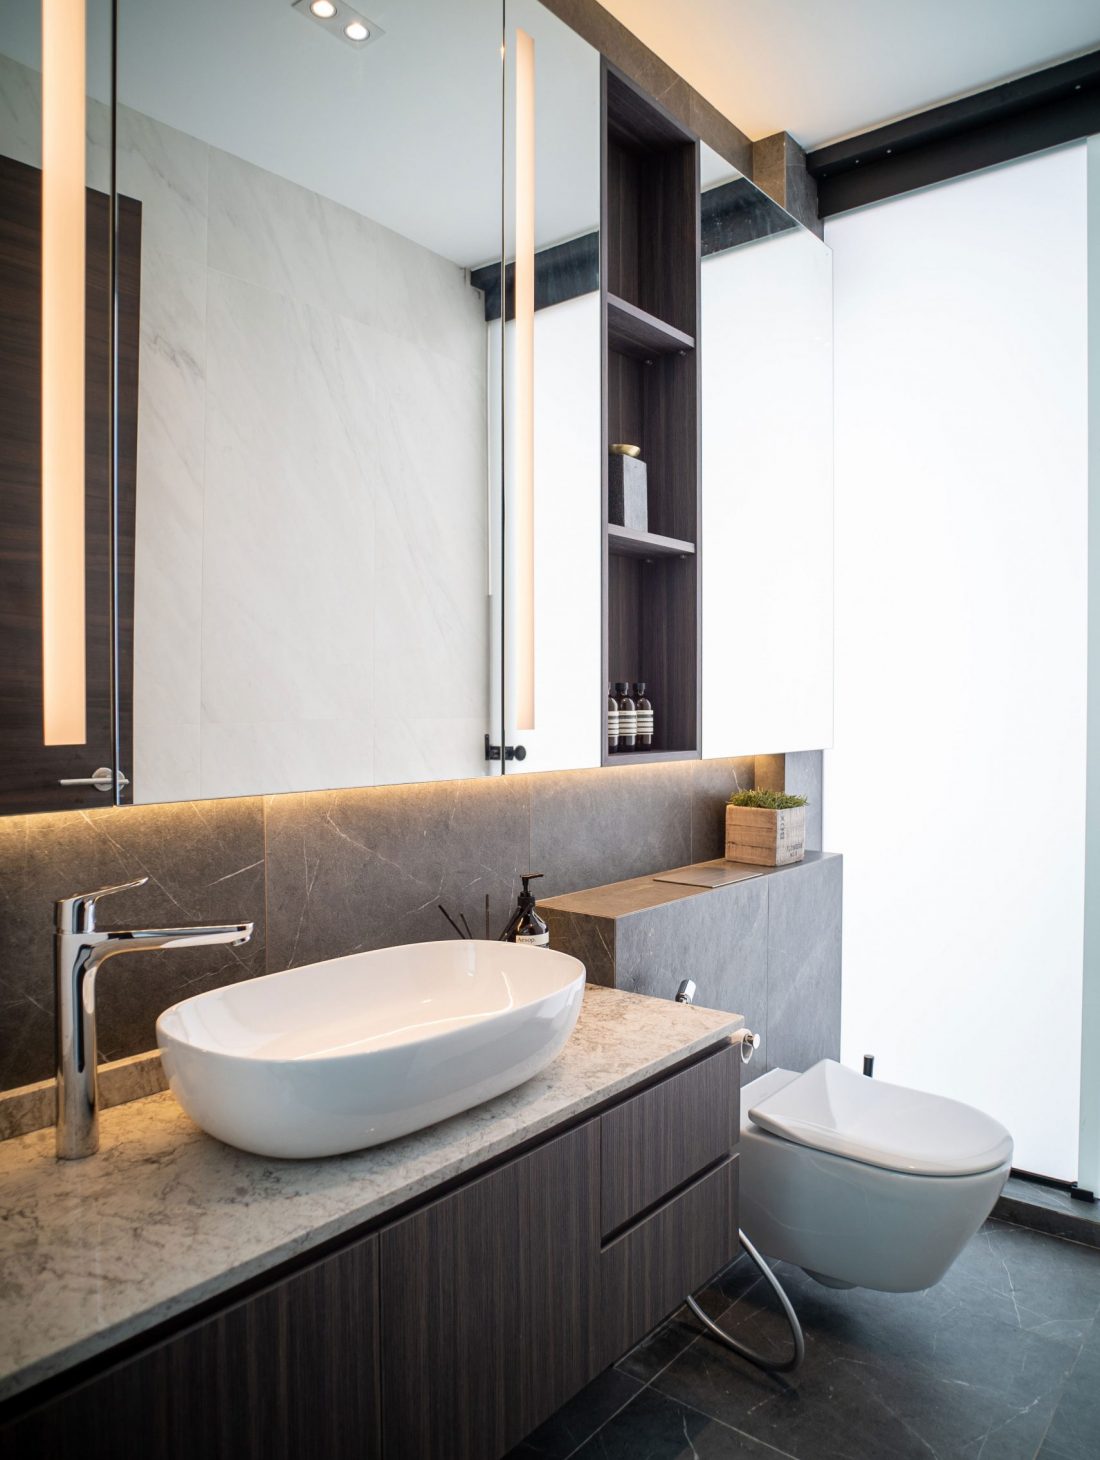 Modern Luxury toilet interior design in marble with mirror vanity